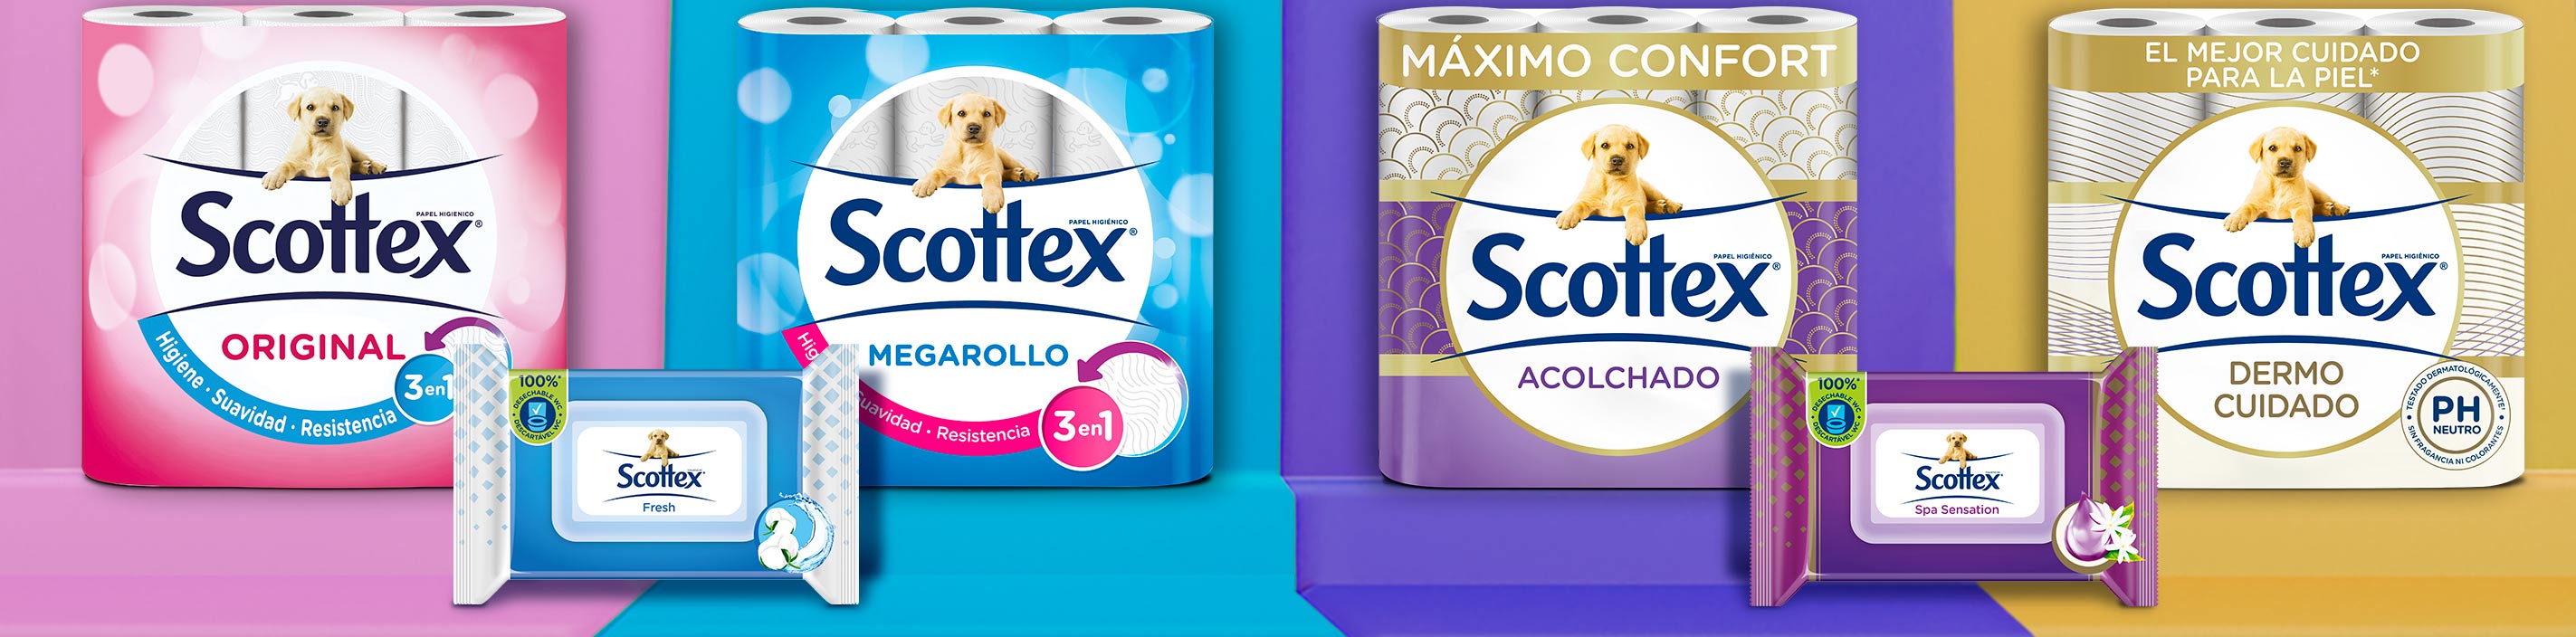 Chollo! 24 rollos papel higiénico Scottex original 7.49€.